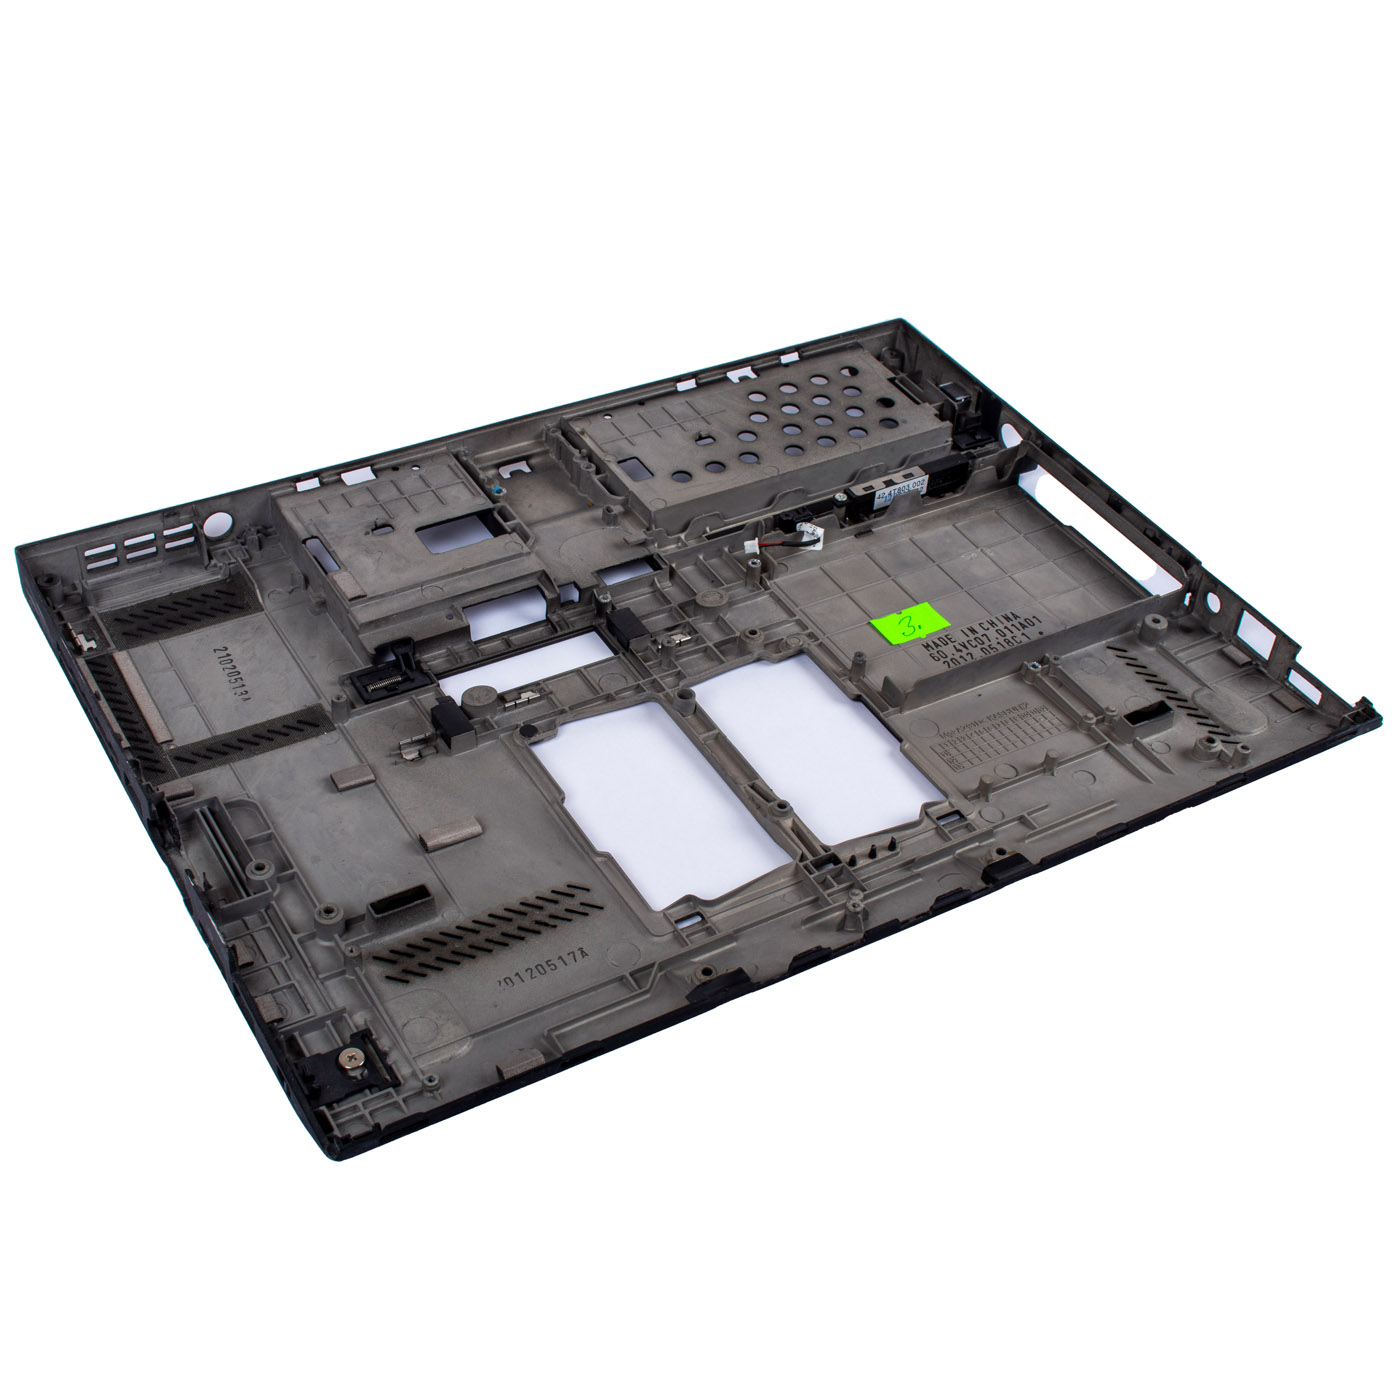 Base cover Lenovo ThinkPad X220T 04W2077 60.4J03